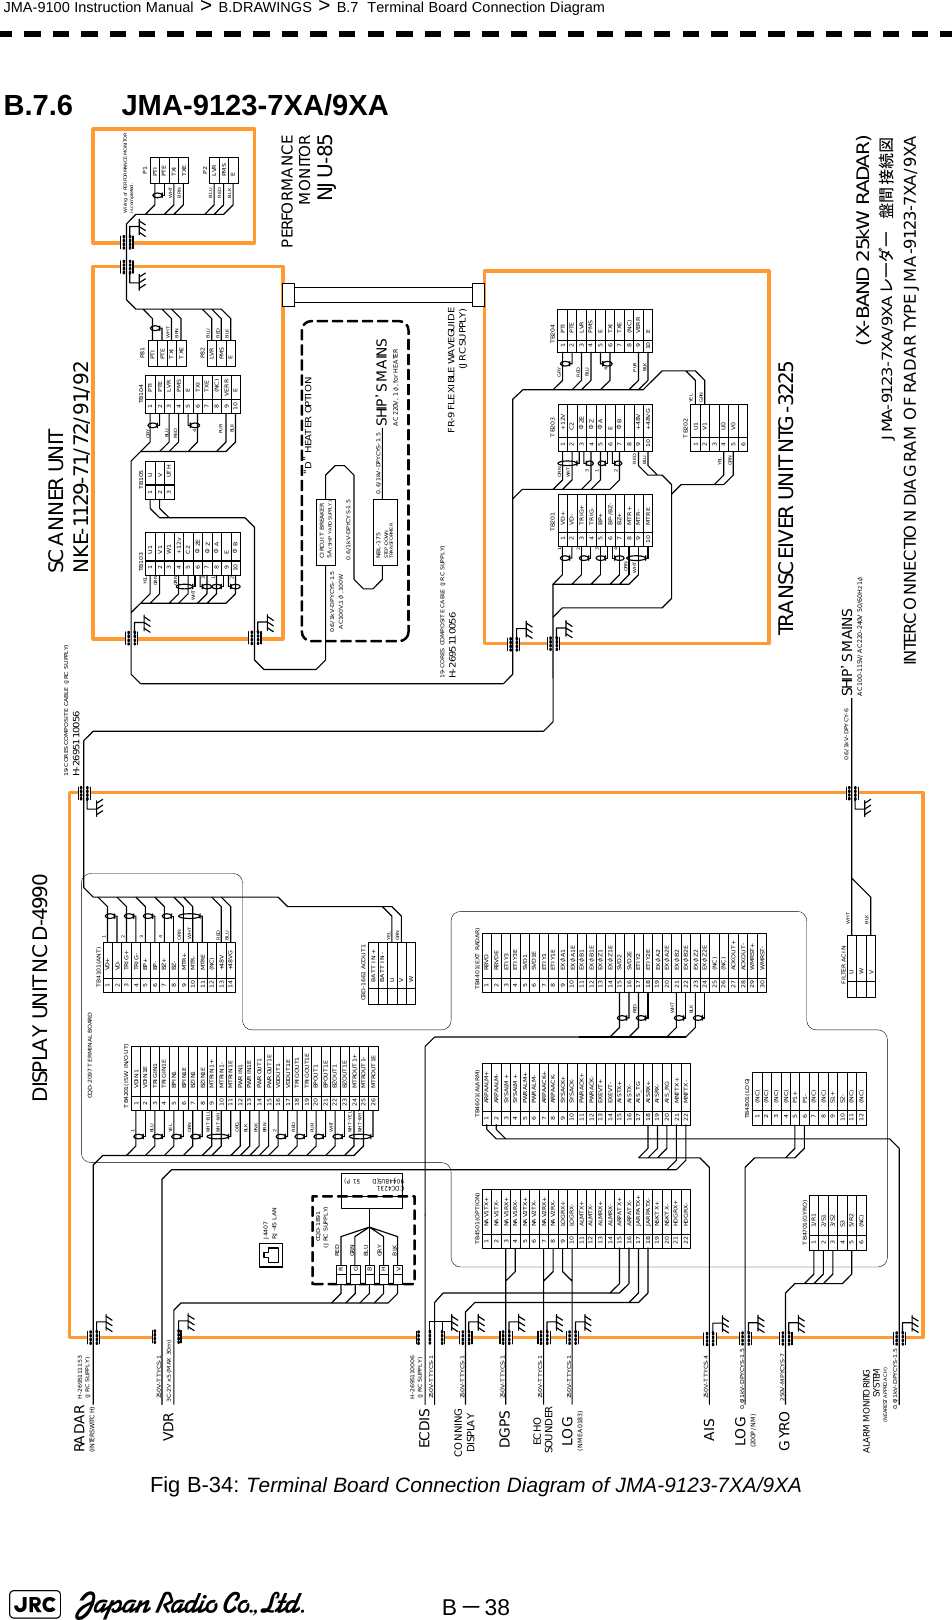 B－38JMA-9100 Instruction Manual &gt; B.DRAWINGS &gt; B.7  Terminal Board Connection DiagramB.7.6 JMA-9123-7XA/9XAFig B-34: Terminal Board Connection Diagram of JMA-9123-7XA/9XA 1VD+2VD-3TRIG+4TRIG-5BP+6BP-7BZ+8BZ-9MTR+10 MTR-11 MTRE12 (NC)13 +48 V14 +48 VGTB4101(ANT)1NA V1 TX+2NA V1 TX-3NA V1 RX+4NA V1 RX-5NA V2 TX+6NA V2 TX-7NA V2 RX+8NA V2 RX-9LO G RX +10 LO G RX -11 ALMTX+12 ALMTX-13 ALMRX+14 ALMRX-15 ARPAT X+16 ARPAT X-17 JAR PA TX+18 JAR PA TX-19 NSKT X+20 NSKT X-21 HDG RX+22 HDG RX-TB4501(OPTION) 1ARPAALM+2ARPAALM-3SYSALM+4SYSALM+5PWRALM+6PWRALM-7ARPAAC K+8ARPAAC K-9SYSACK+10 SYSACK-11 PWRACK+12 PWRACK-13 EXEVT+14 EXEVT-15 AISTX+16 AISTX-17 AIS_TG18 AISRX+19 AISRX-20 AIS_RG21 MNTTX+22 MNTTX-TB4601(ALARM) TB4401(EXT RADAR)1RBVD2RBVDE3ETIY34ETIY3E5SVD16SVD1E7ETIY18ETIY1E9EXφA110 EXφA1E11 EXφB112 EXφB1E13 EXφZ114 EXφZ1E1516171819202122232425 (NC)26 (NC)27 ACKOUT+28 ACKOUT-29 WMRST+30 WMRST-SVD2SVD2EETIY2ETIY2EEXφA2EXφA2EEXφB2EXφB2EEXφZ2EXφZ2E1(NC)2345P1+6P1-789S1+10 S2-1112TB4801(LOG)(NC)(NC)(NC)(NC)(NC)(NC)(NC) UWVFILTER ACINCDC-1324J4409(DSUB-15P)RCQD-1891(JRC SUPPLY)GBHVREDGRNBLUGR YBLK11/R122/S133/S24S355/R26(NC)TB4701(GYRO)PTIPTETXITXELVRPMSEP82P81PTIPTETXITXELVRPMSEP2P1SCANNER UNITNKE-1129-71/72/91/92PERFORMANCEMONITORNJU-85DISPLAY UNIT NCD-4990BLU1YE LGRNWHT-B LUWHT-WH TORGBLKPNKBR N2REDPURWHT-YELWHT-WH TH-2695111153(JRC SUPPLY)1VDIN12VDIN1E3TRIGIN14TRIGIN1E5BPIN16BPIN1E7BZIN18BZIN1E9MTRIN1+10 MTRIN1-11 MTRIN1E12 PWRIN113 PWRIN1E14 PWROUT115 PWROUT1E16 VDOUT117 VDOUT1E18 TRIGOUT119 TRIGOUT1E20 BPOUT121 BPOUT1E22 BZOUT123 BZOUT1E24 MTROUT1+25 MTROUT1-26 MTROUT1ETB4201(ISW IN/OUT)RADAR(INTERSWITC H)WHTREDWH TBLKECDISH-2695110006(JRC SUPPLY)250V-TTYCS-1250V-TTYCS-1CONNINGDISPLAYVDR3C-2V x5 (MAX 30m)250V-TTYCS-1250V-TTYCS-1250V-TTYCS-1250V-TTYCS-1DGPSECHO SOUNDERLOG(NMEA0183)250V-TTYCS-4AIS0.6/1kV-DPYCYS-1.5250V-MPYCYS-7GYROLOG(200P /NM)0.6/1kV-DPYCYS-1.5ALARM MONITORINGSYSTEM(NEAREST APPROACH)REDBLU3ORN WHTSHIP’S MAINSAC100-115V/AC220-240V 50/60Hz 1φ(X-BAND 25kW RADAR)JMA-9123-7XA/9XA レーダー 盤間接続図INTERCONNECTION DIAGRAM OF RADAR TYPE JMA-9123-7XA/9XAWHTBLKWHTBRNBLUREDBLKWHTBRNBLUREDBLK19-C ORES COMPOSITE CABLE (JRC SUPPLY)H-2695110056CQD-2097 T ERMINAL  BOARD124YELGRN123UVUT HTB105CIRCUIT BREAKER5A ( SHIP  YA RD SU PPLY )0.6/1kV-DPYCYS-1.5AC100V,1φ,100WNBL -175STEP -DO WN  TRA NSFO RME R0.6/1kV-DPYCYS-1.50.6/1kV -DPYCYS-1.5SHIP’S MAINSAC 220V , 1φ,for HEATER“D” HEATER OPTIONPTIPTELVRPMS(NC)ETB104TXITXE12345678E910 VER R1ΦB23C24ΦZE5U16V17W18+12v9ΦZ10ΦAETB103123V145U06V0U1TB2021GR NYELFR-9 FLEXIBLE WAVEGUIDE(JRC SUPPLY)19-CORES COMPOSITE CABLE (JRC SUPPLY)H-26951100561MTRE23BP+4BP-/BZ-5VD+6VD-7TRIG+8TRIG-9BZ+10MTR+MTR-TB201 123ΦA4E5+12V6C27ΦZE8ΦZ9ΦB10 +48V+48VGTB203 12345678910TB204PTIPTELVRPMS(NC)ETXITXEEVERR23GRNYE LREDBLU4ORNWHTORNWH T3124GRYREDBLUTRANSCEIVER UNIT NTG-32254GRYBLURED213WHTOR NYELGR NWiring  of  PERFOR MAN CE MONITORis completed.0.6/1kV-DPY CY-6PURBLKPURBLKJ4407RJ-45 LANUVWCBD-1661 ACOUT1BATT IN -BATT IN +